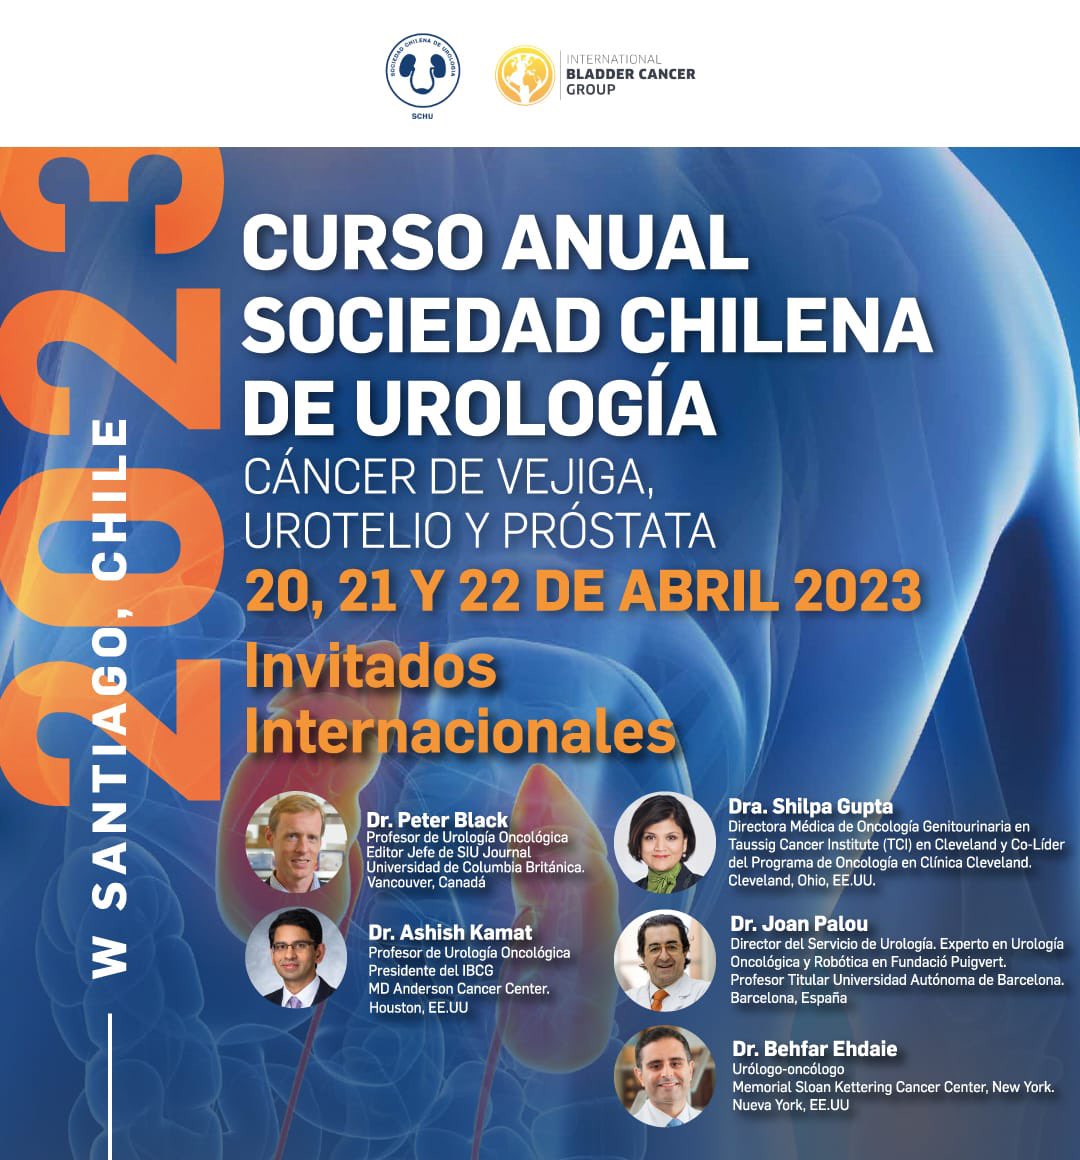 9 dias para Curso Anual de la Sociedad Chilena de Urologia — Oportunidad unica de discutir Urologia Oncologica con expertos de primera linea! Inscripciones cursourologia.cl/inscripcion @BehfarEhdaieMD @IBCG_BladderCA @Urolchi @UroDocAsh @pcvblack @joanfundi @shilpaonc #CursoSCHU2023